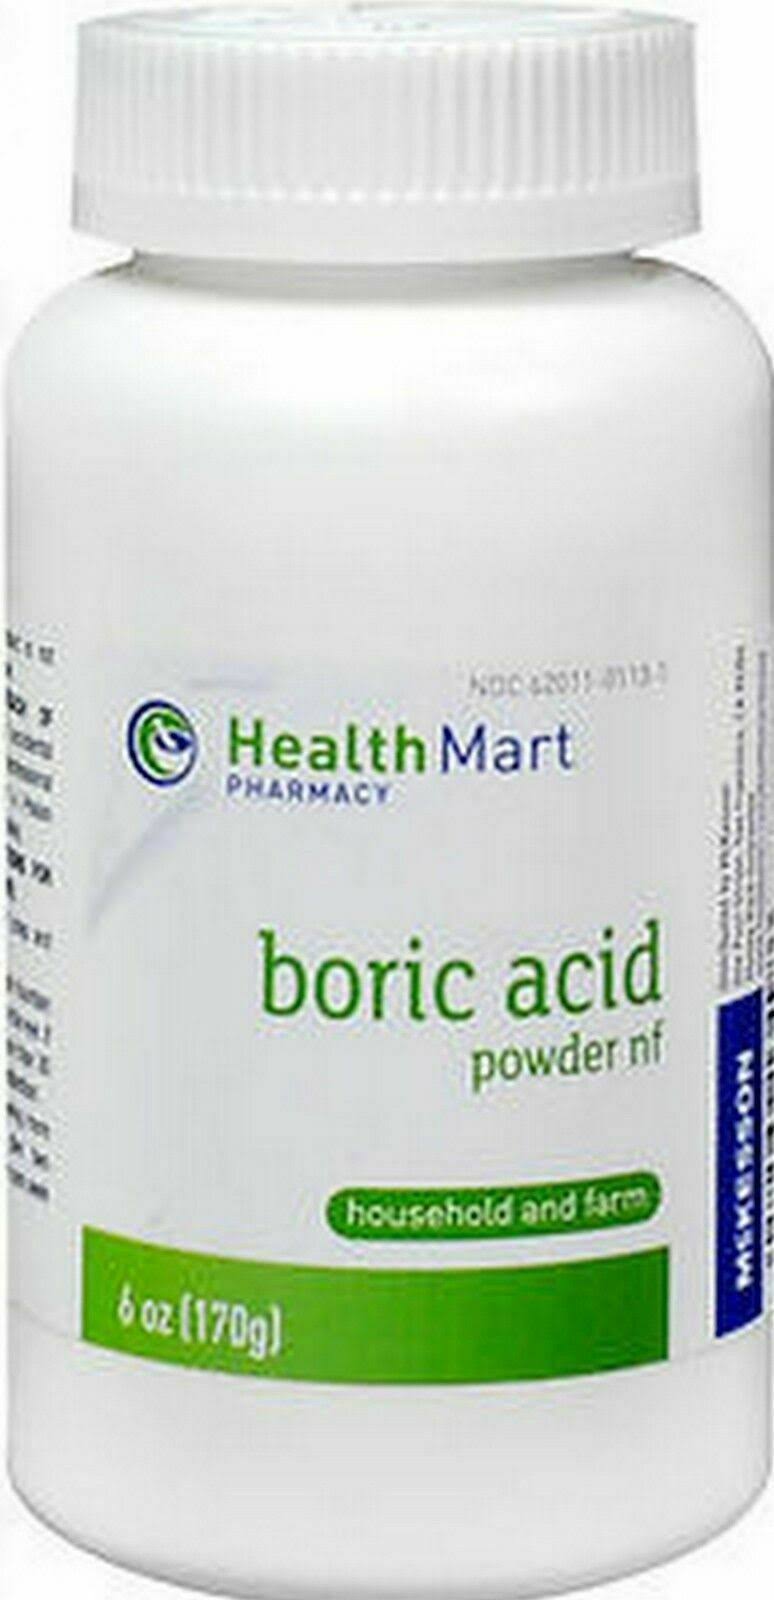 Health Mart Boric Acid Powder - 6 oz